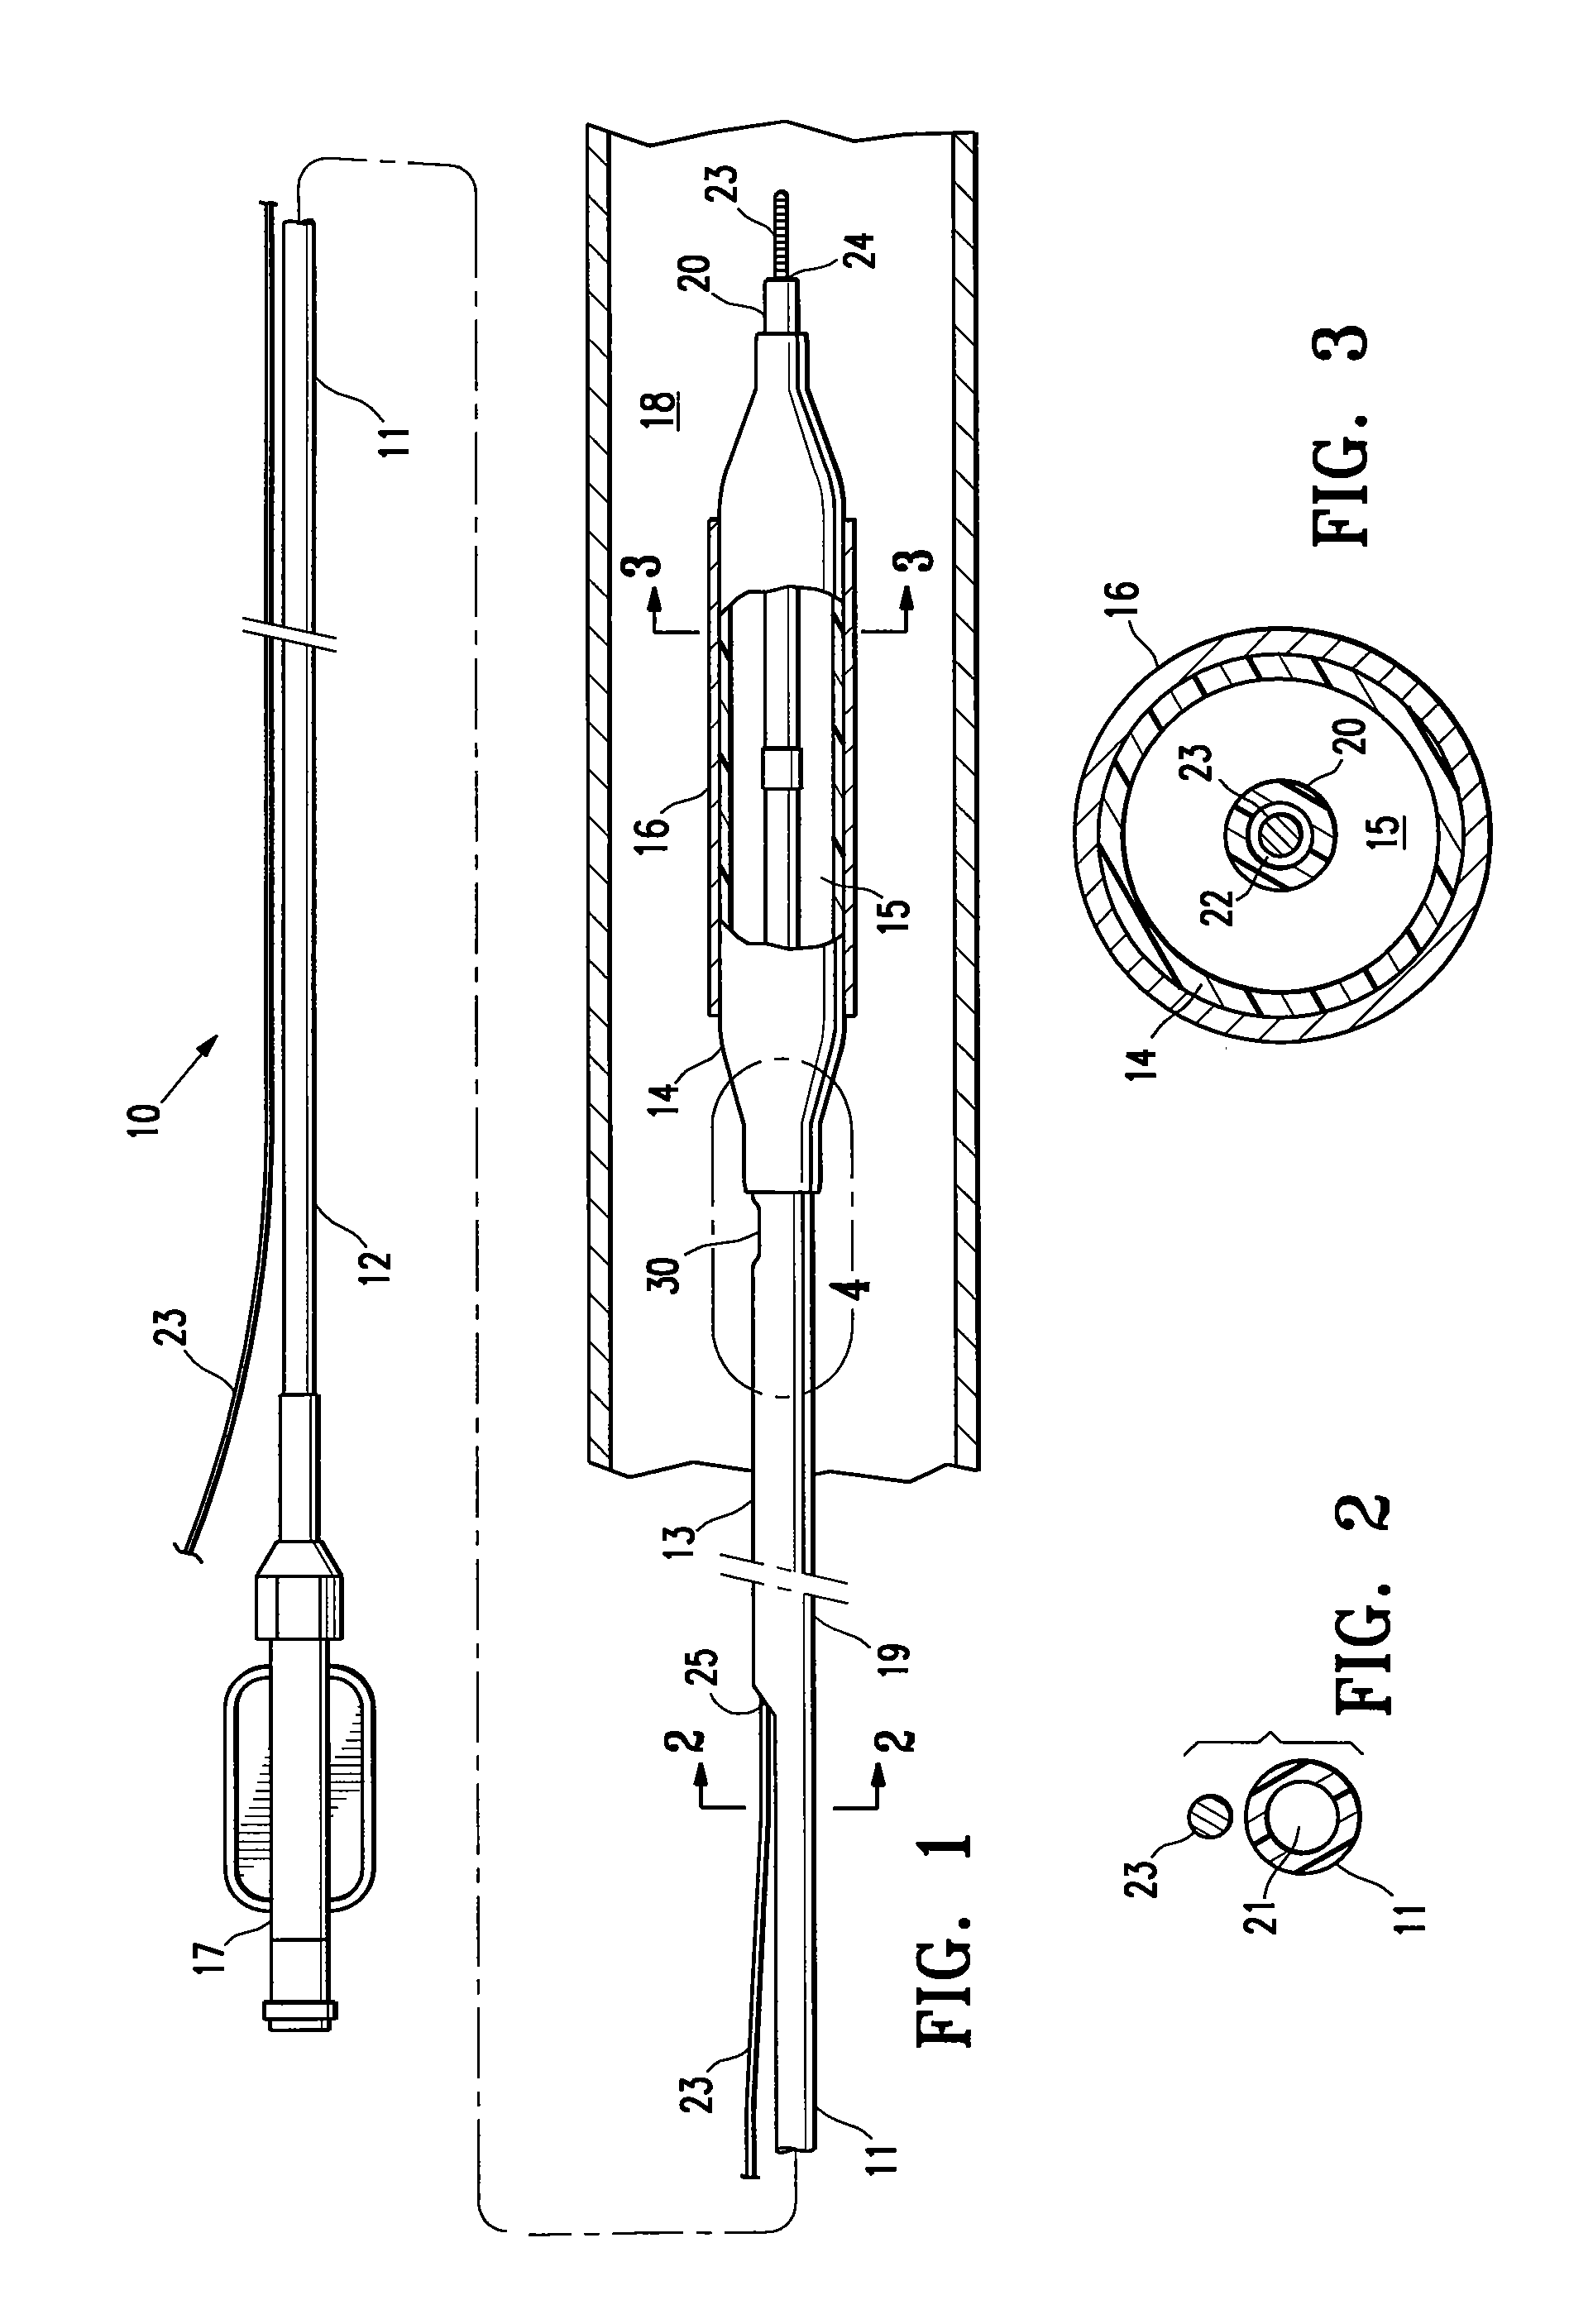 Balloon catheter having a shaft with a variable stiffness inner tubular member